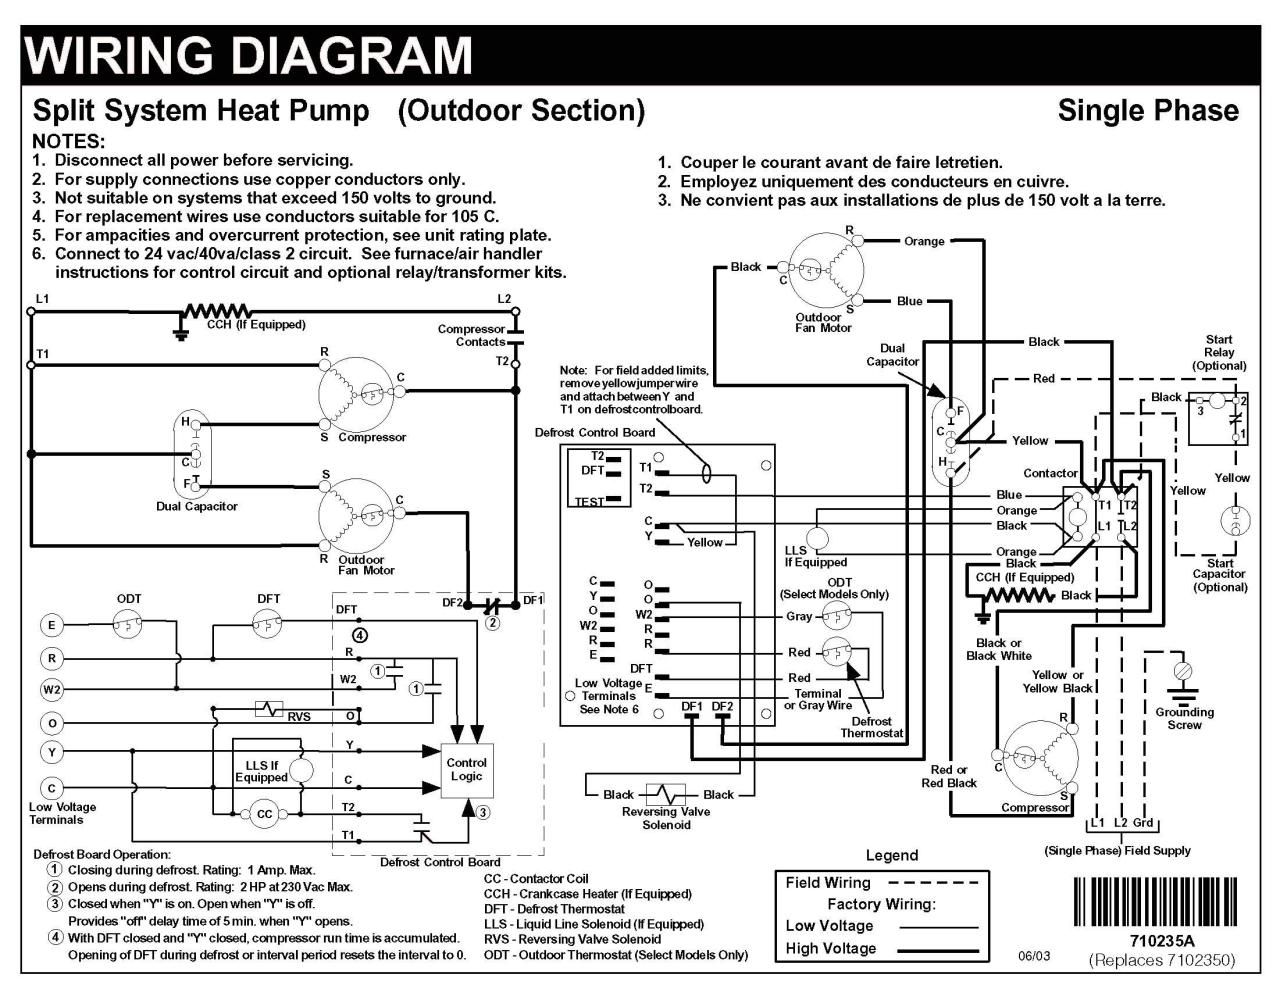 Air Conditioning Wiring Schematic Wiring Diagram Networks